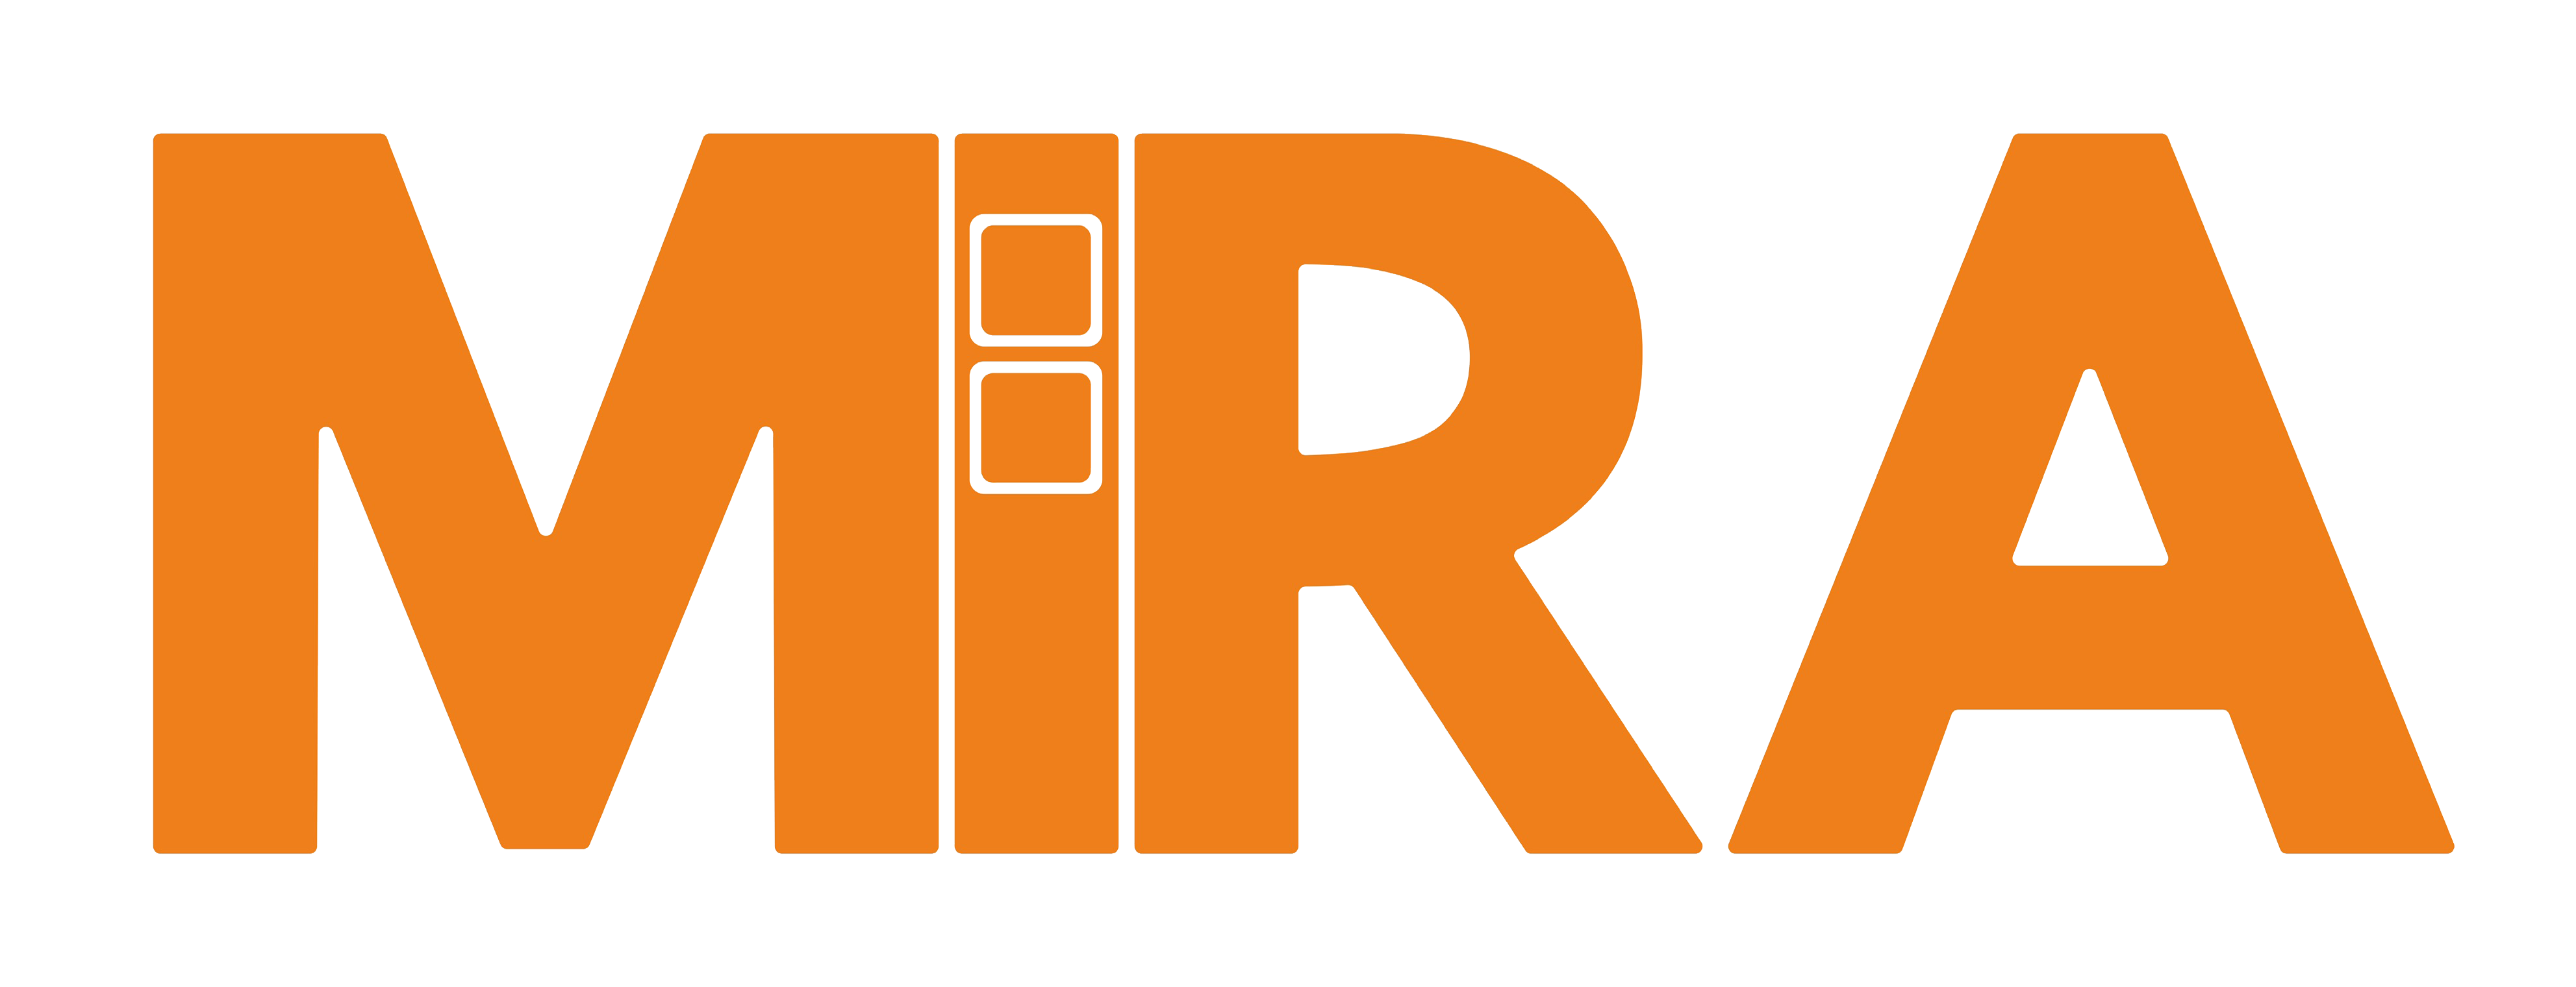 Компания "Mira Systems" - Город Санкт-Петербург лого-оранж_.png